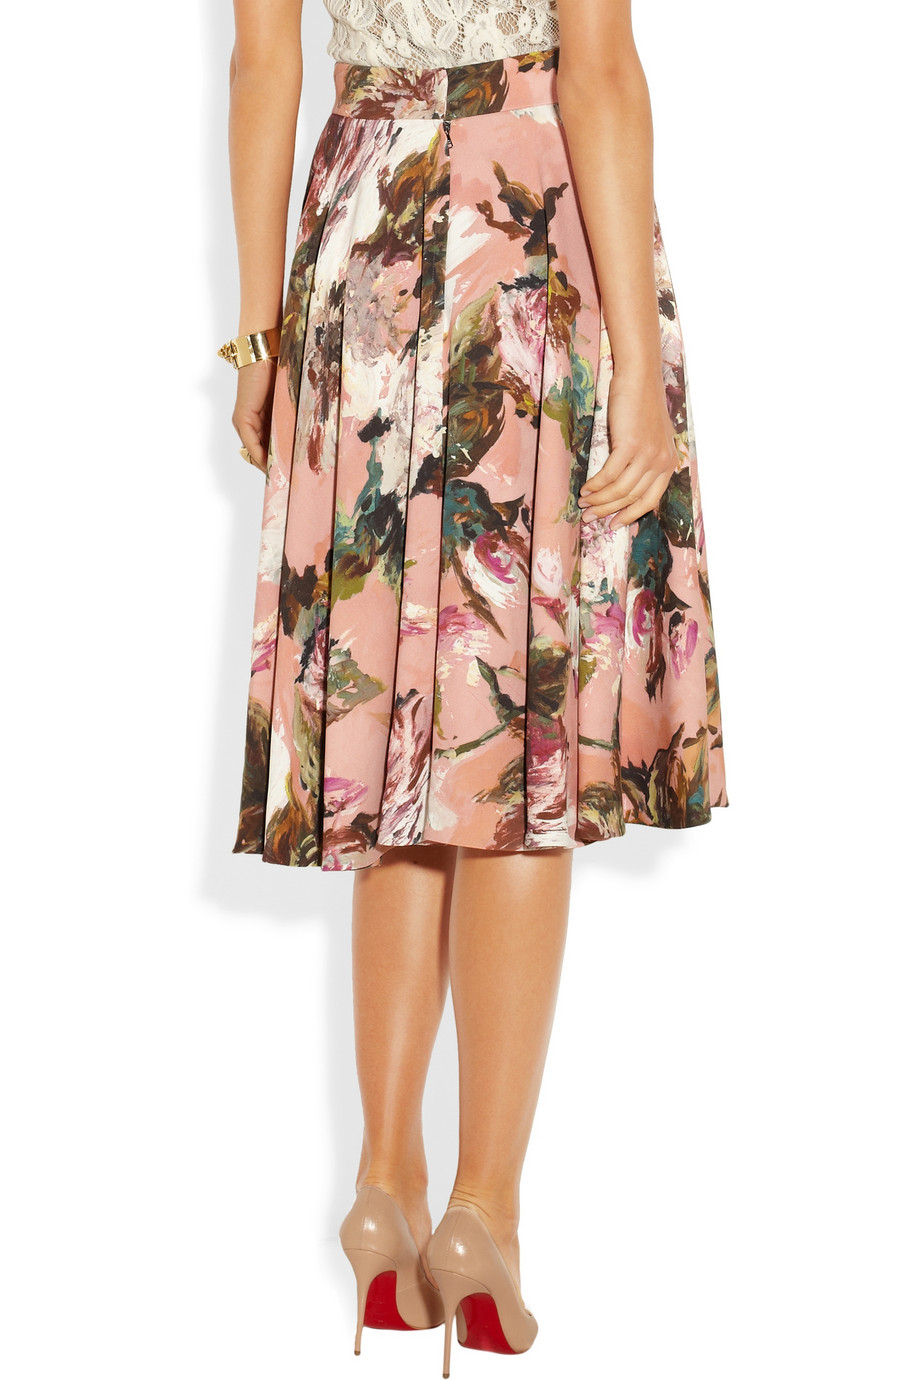 Lyst - Dolce & gabbana Rose-print Crepe Circle Skirt in Pink